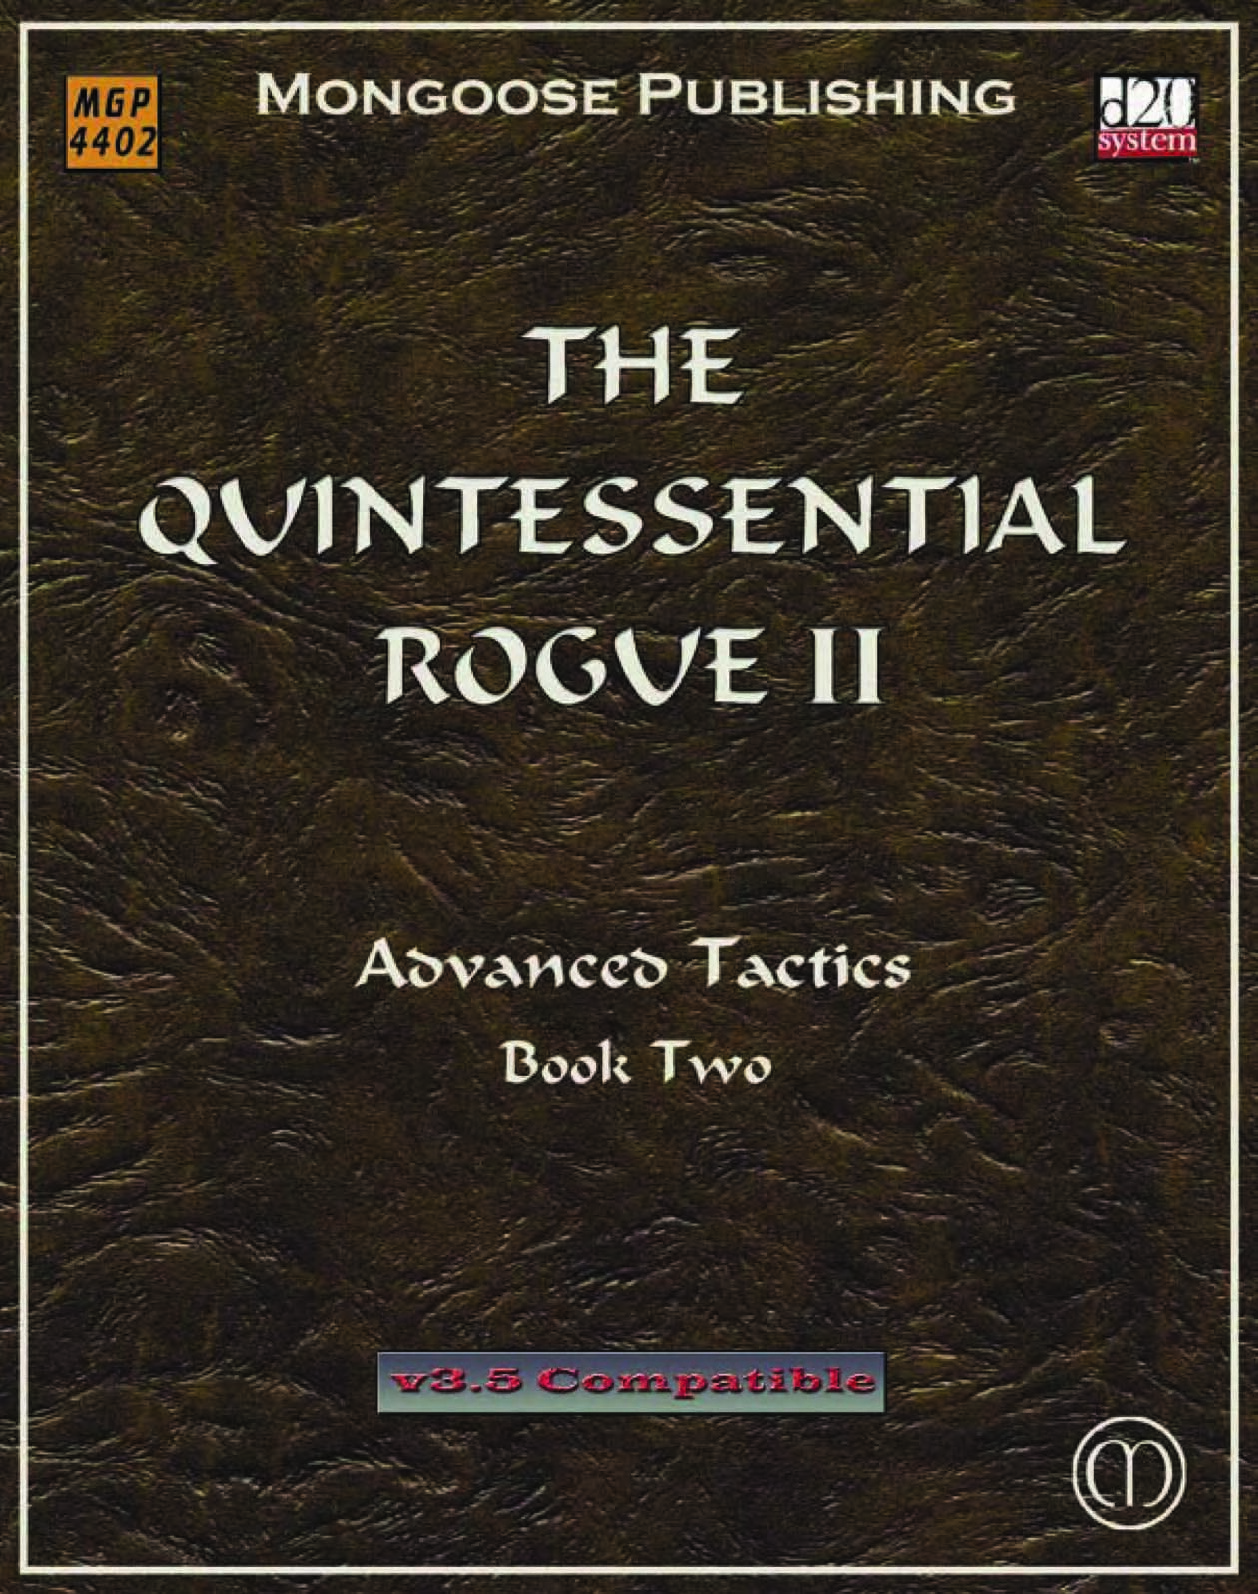 The Quintessential Rogue II